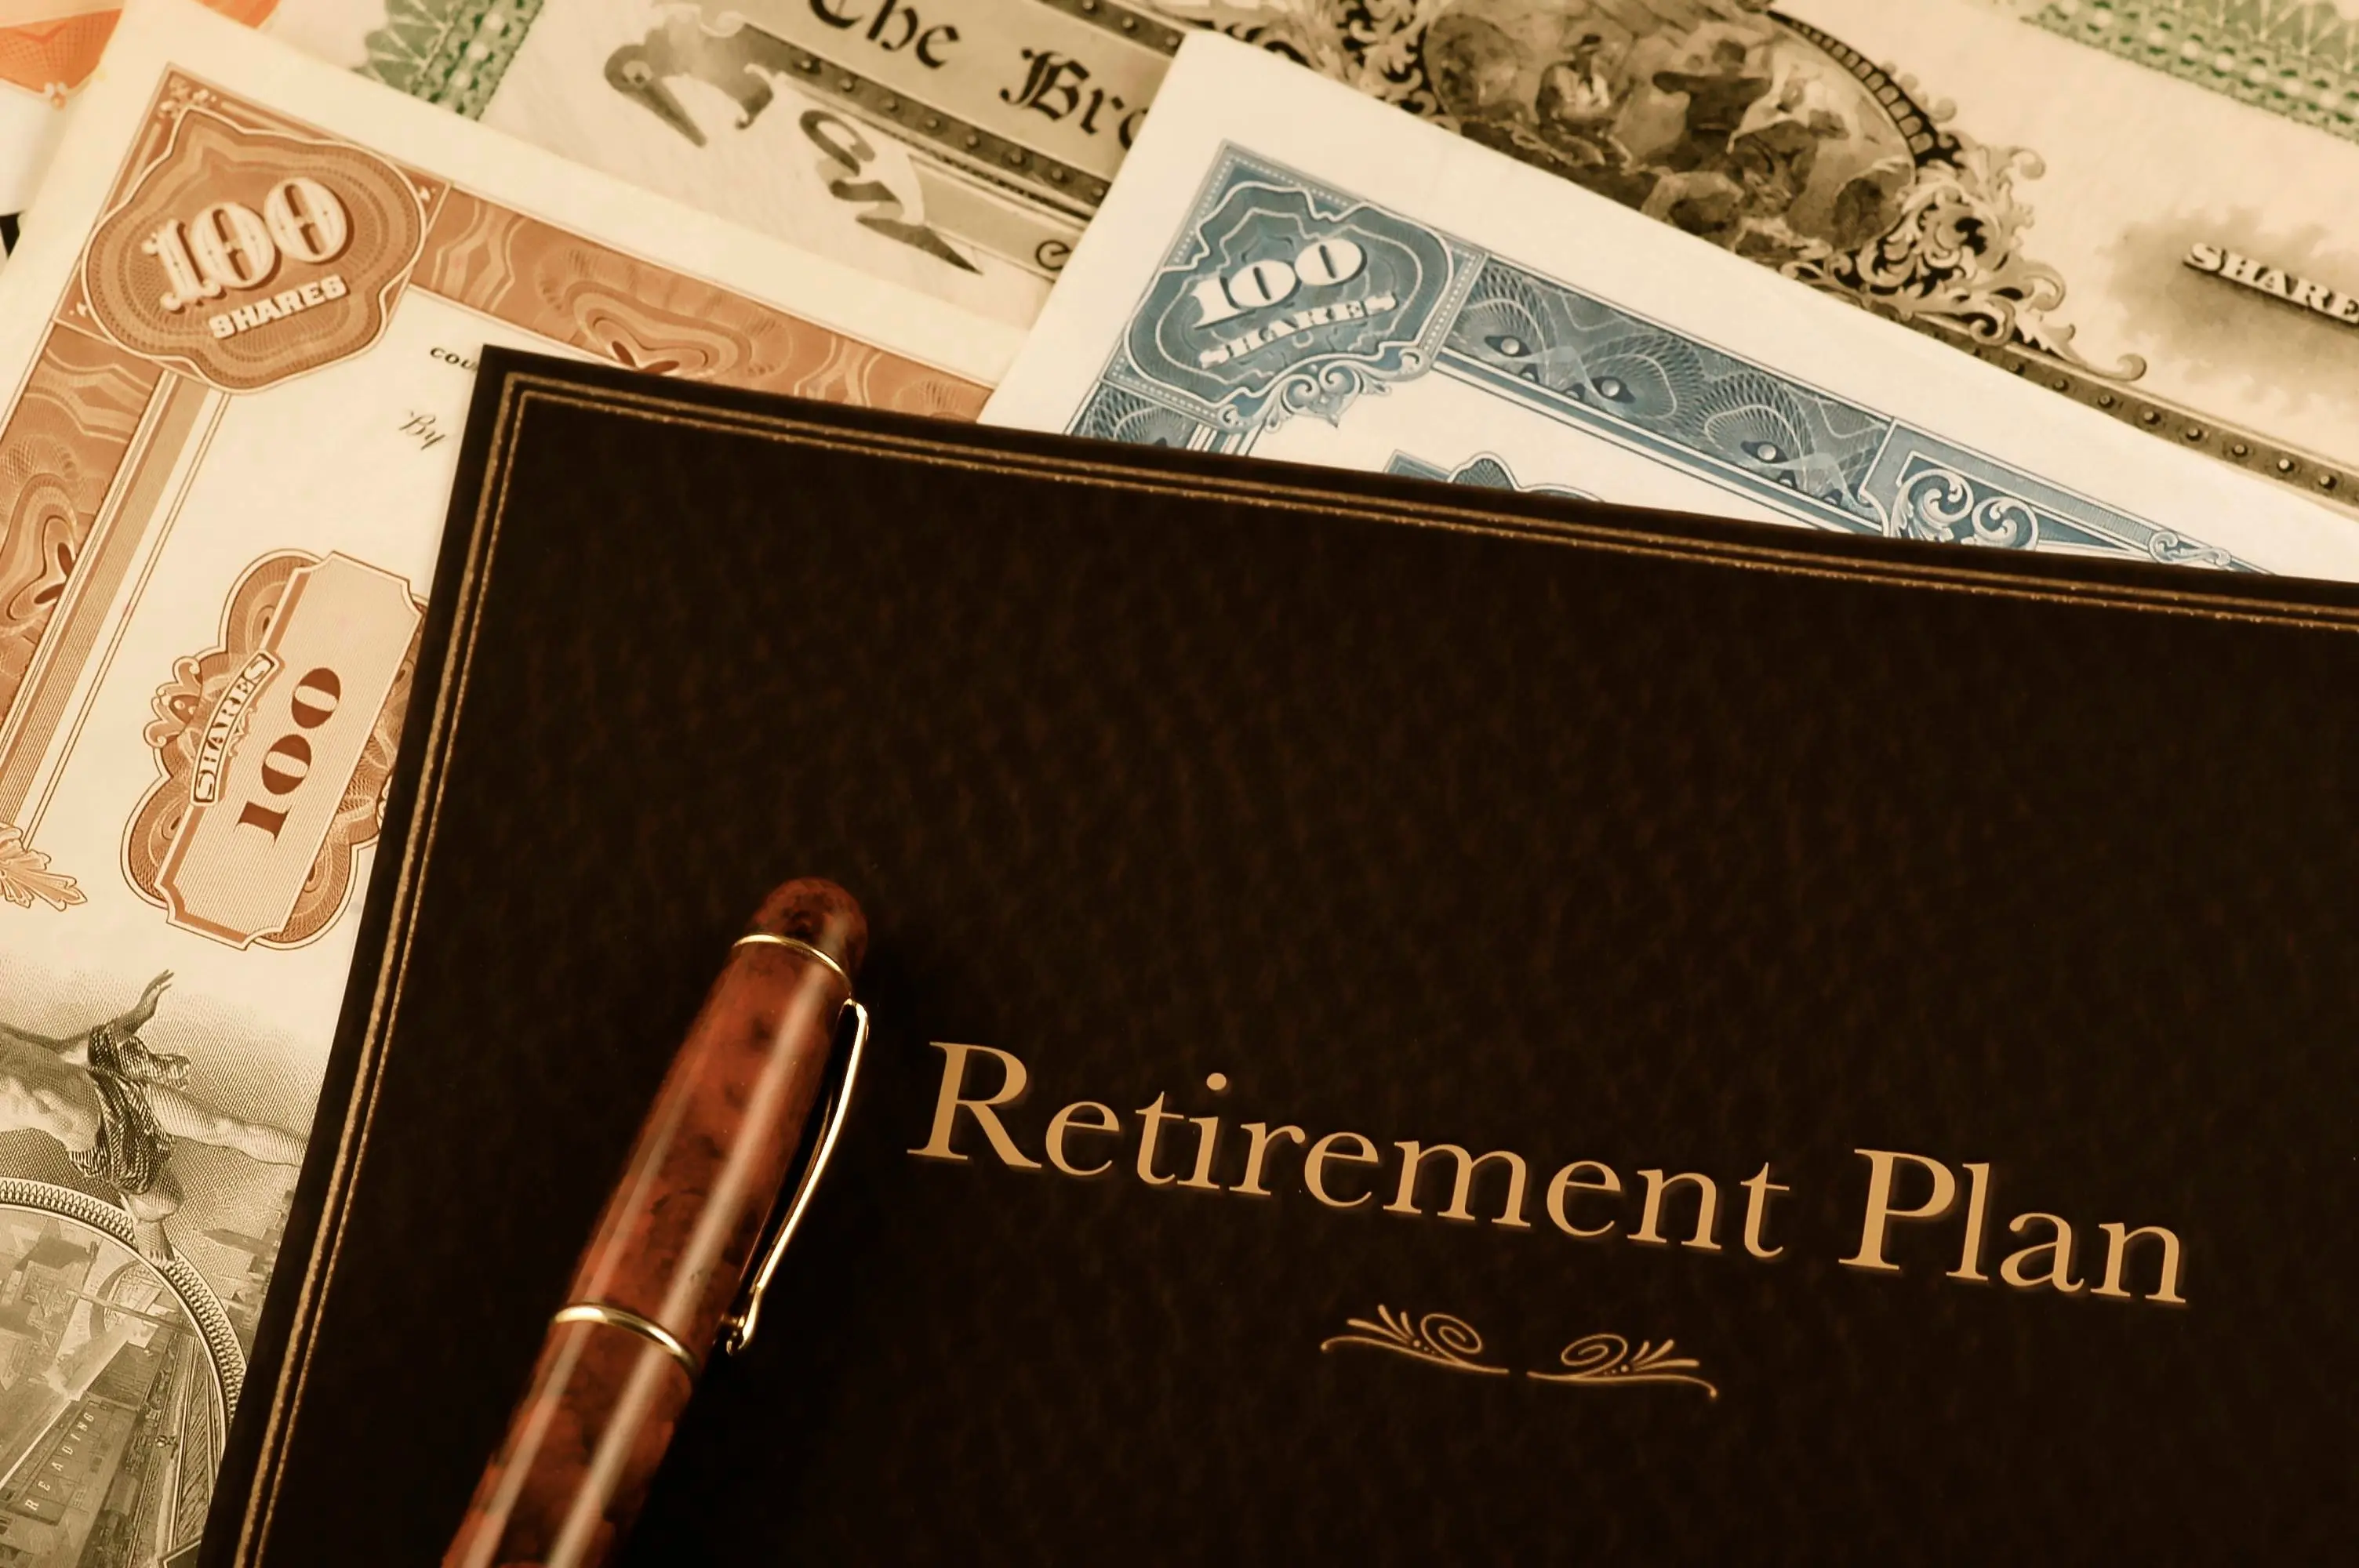 Retirement plan assets